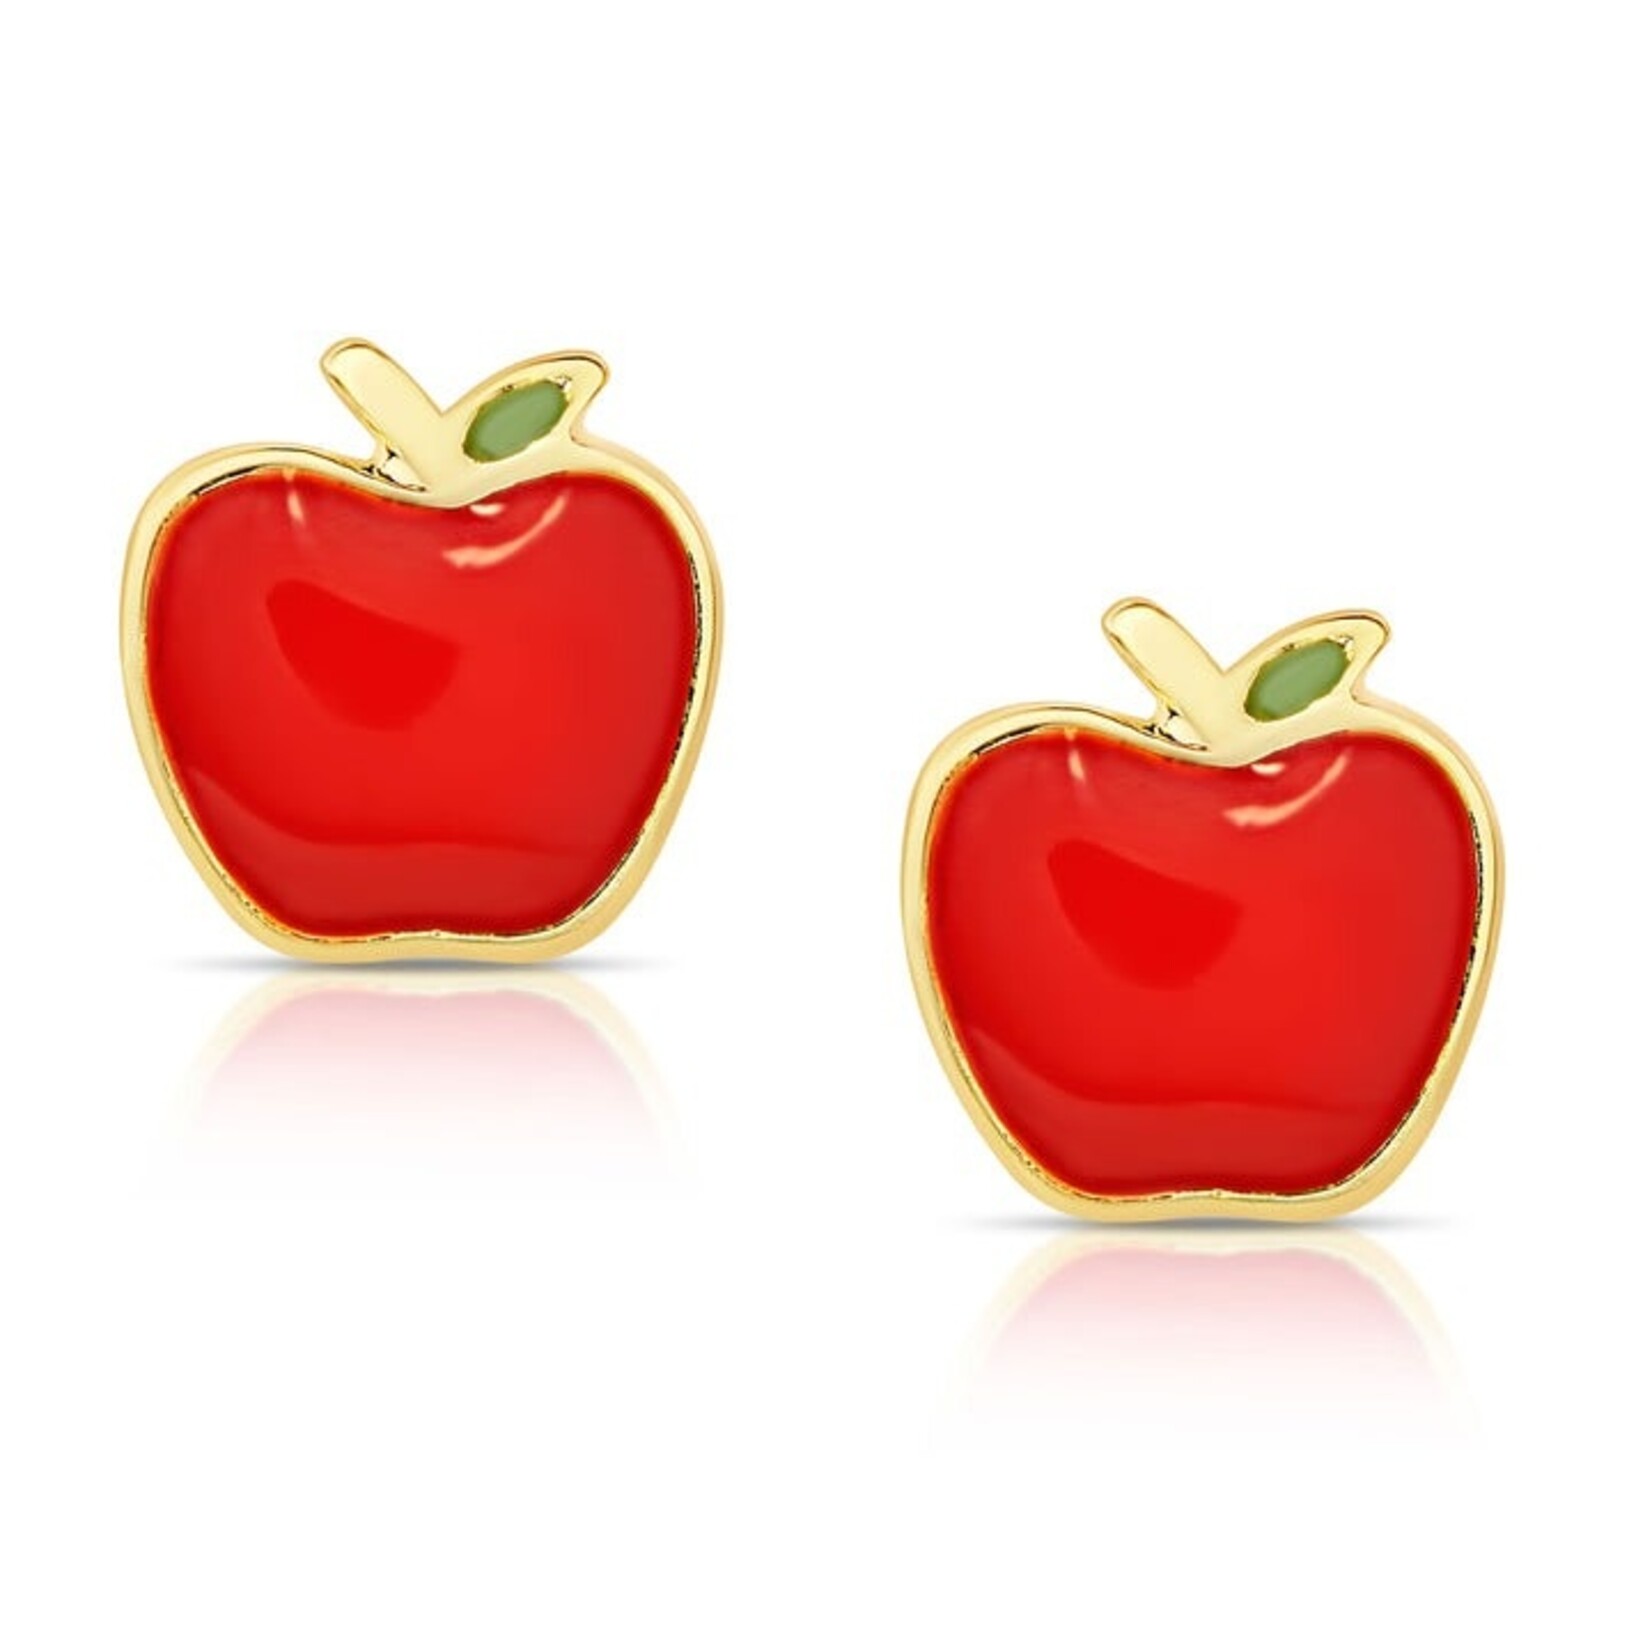 Lily Nily Apple Stud Earrings